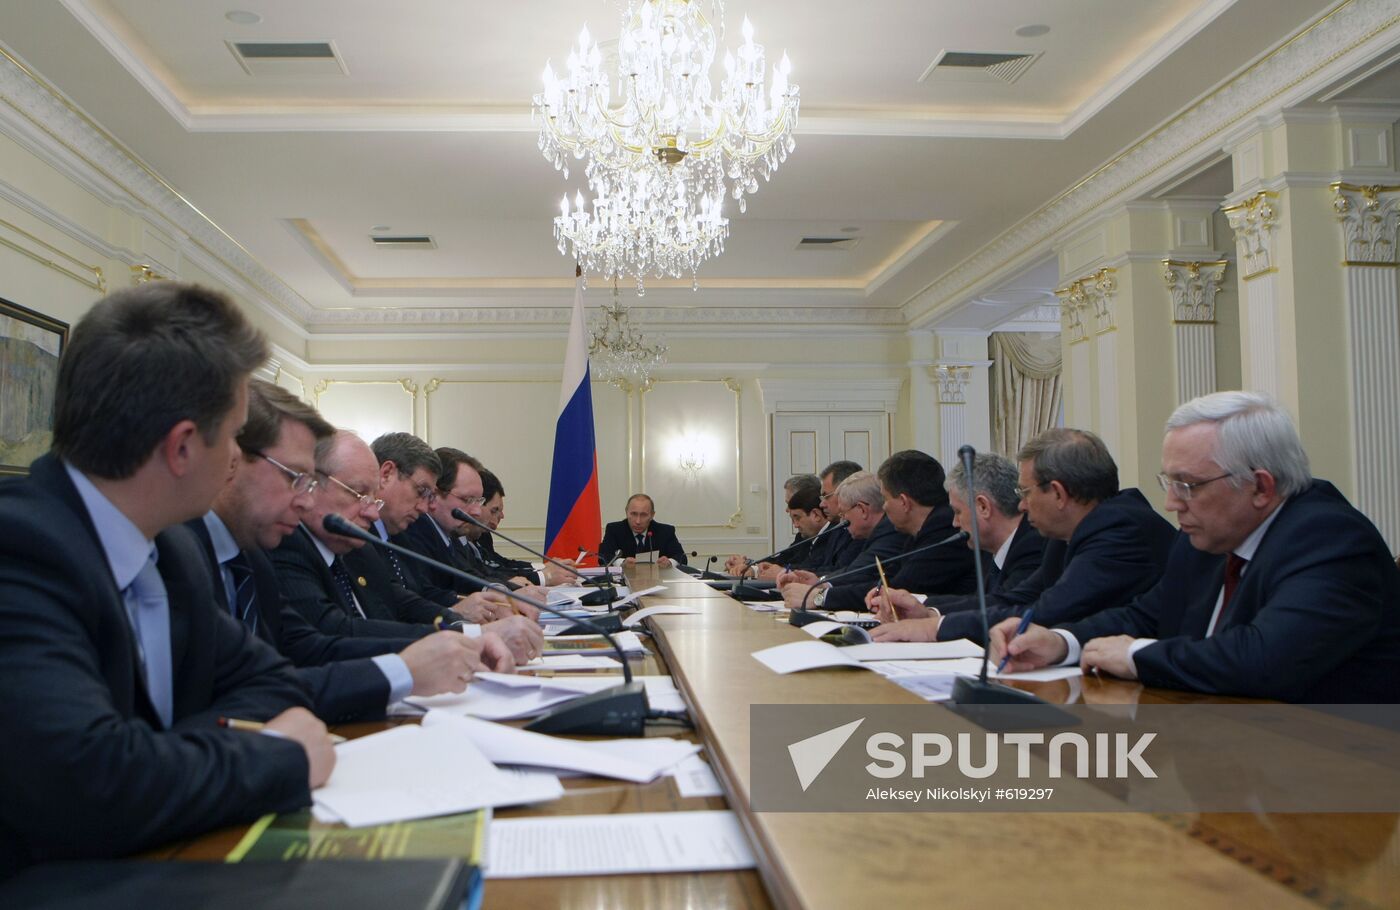 Vladimir Putin chairs meeting on Glonass navigation system